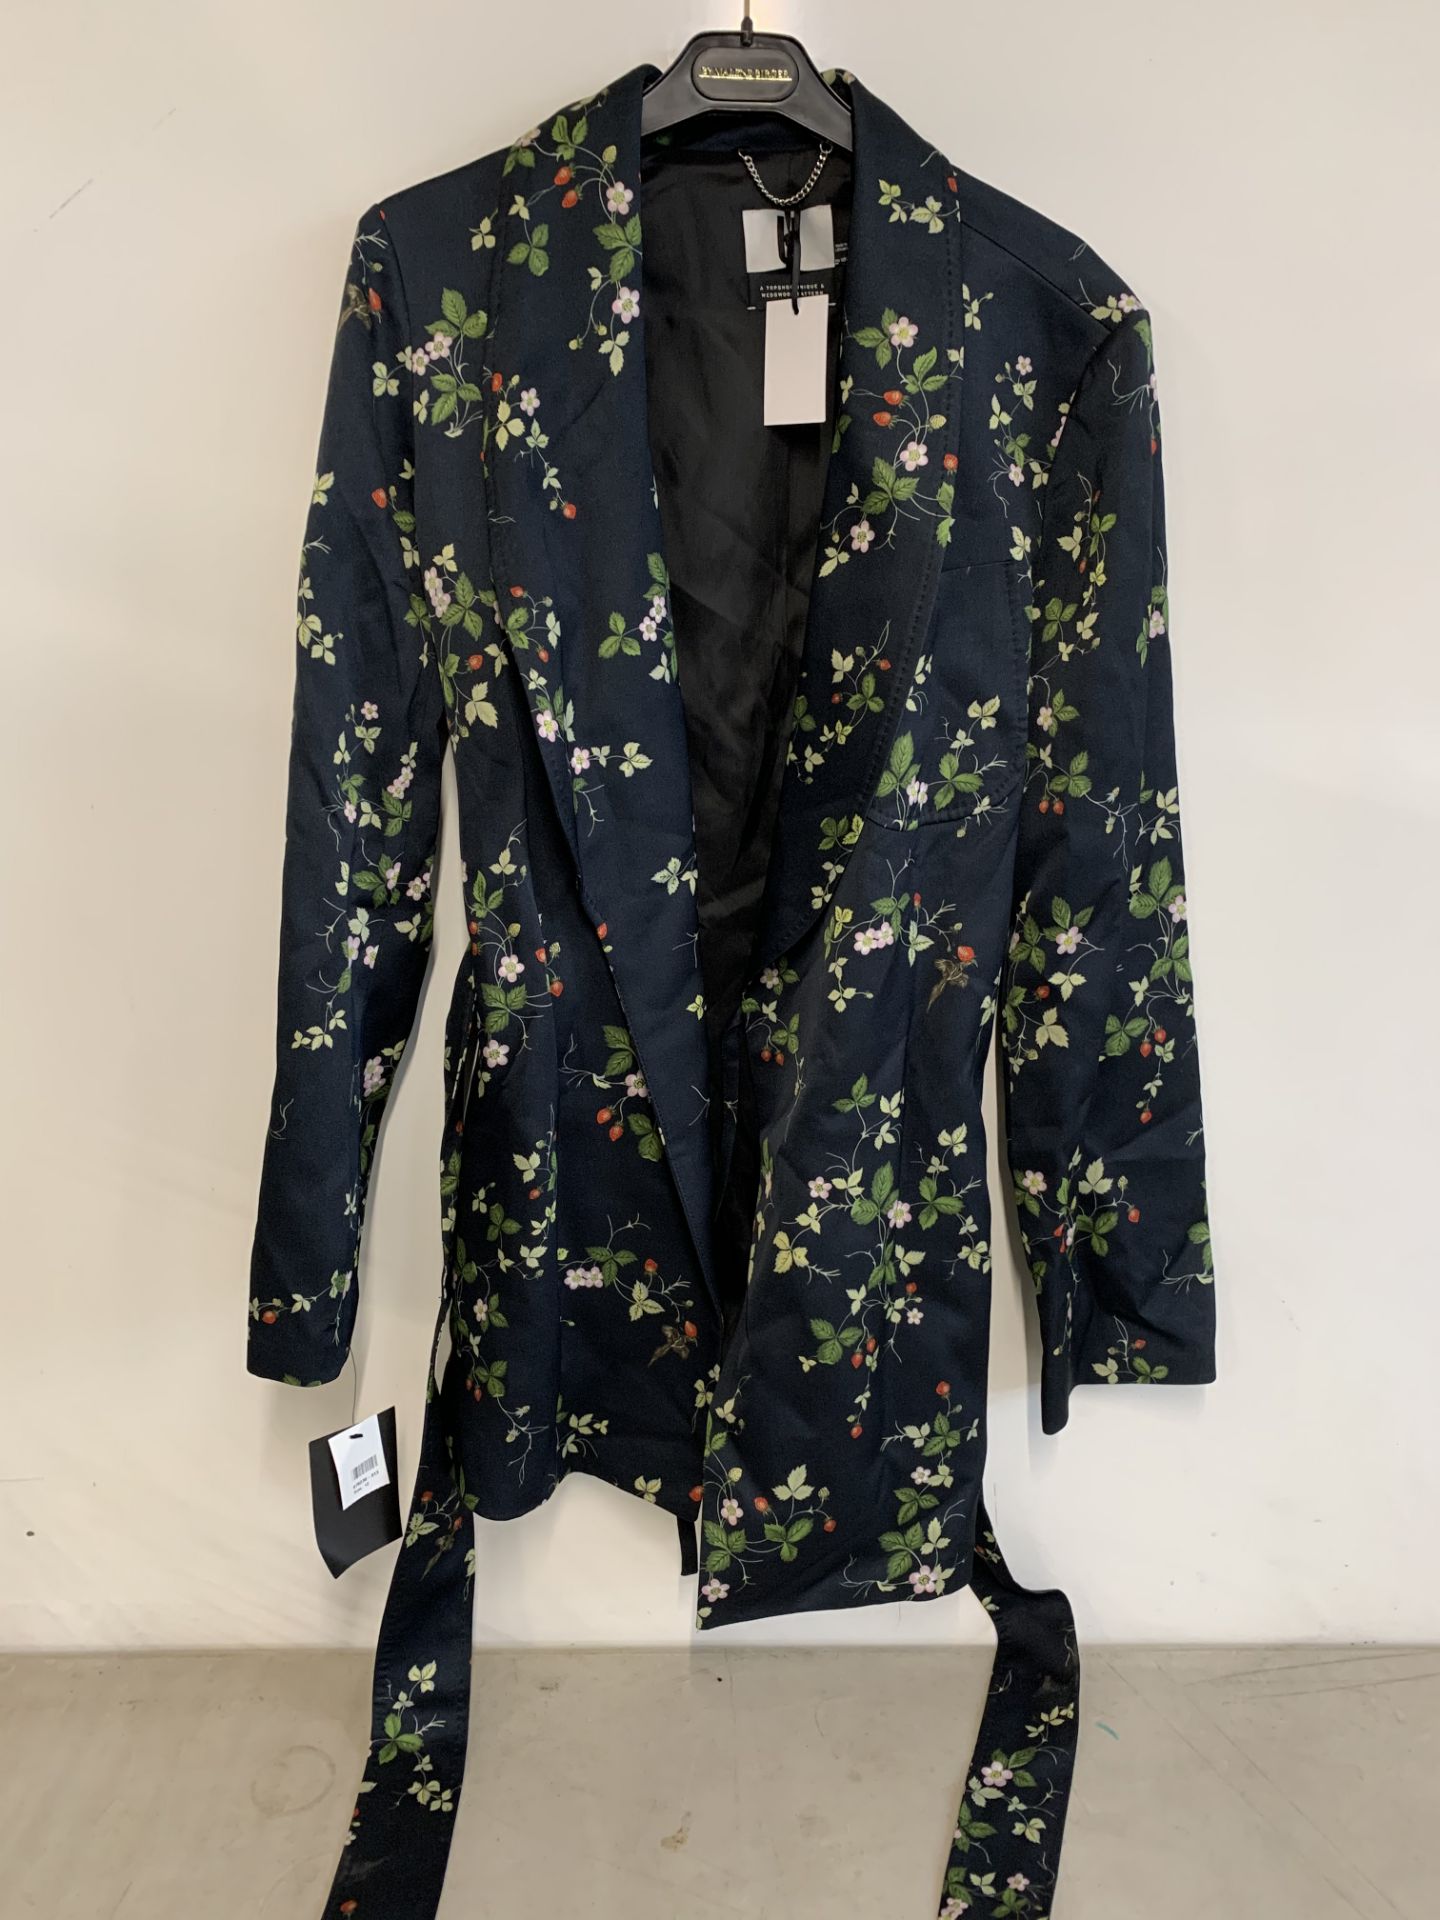 A Topshop unique Wedgewood pattern silk jacket